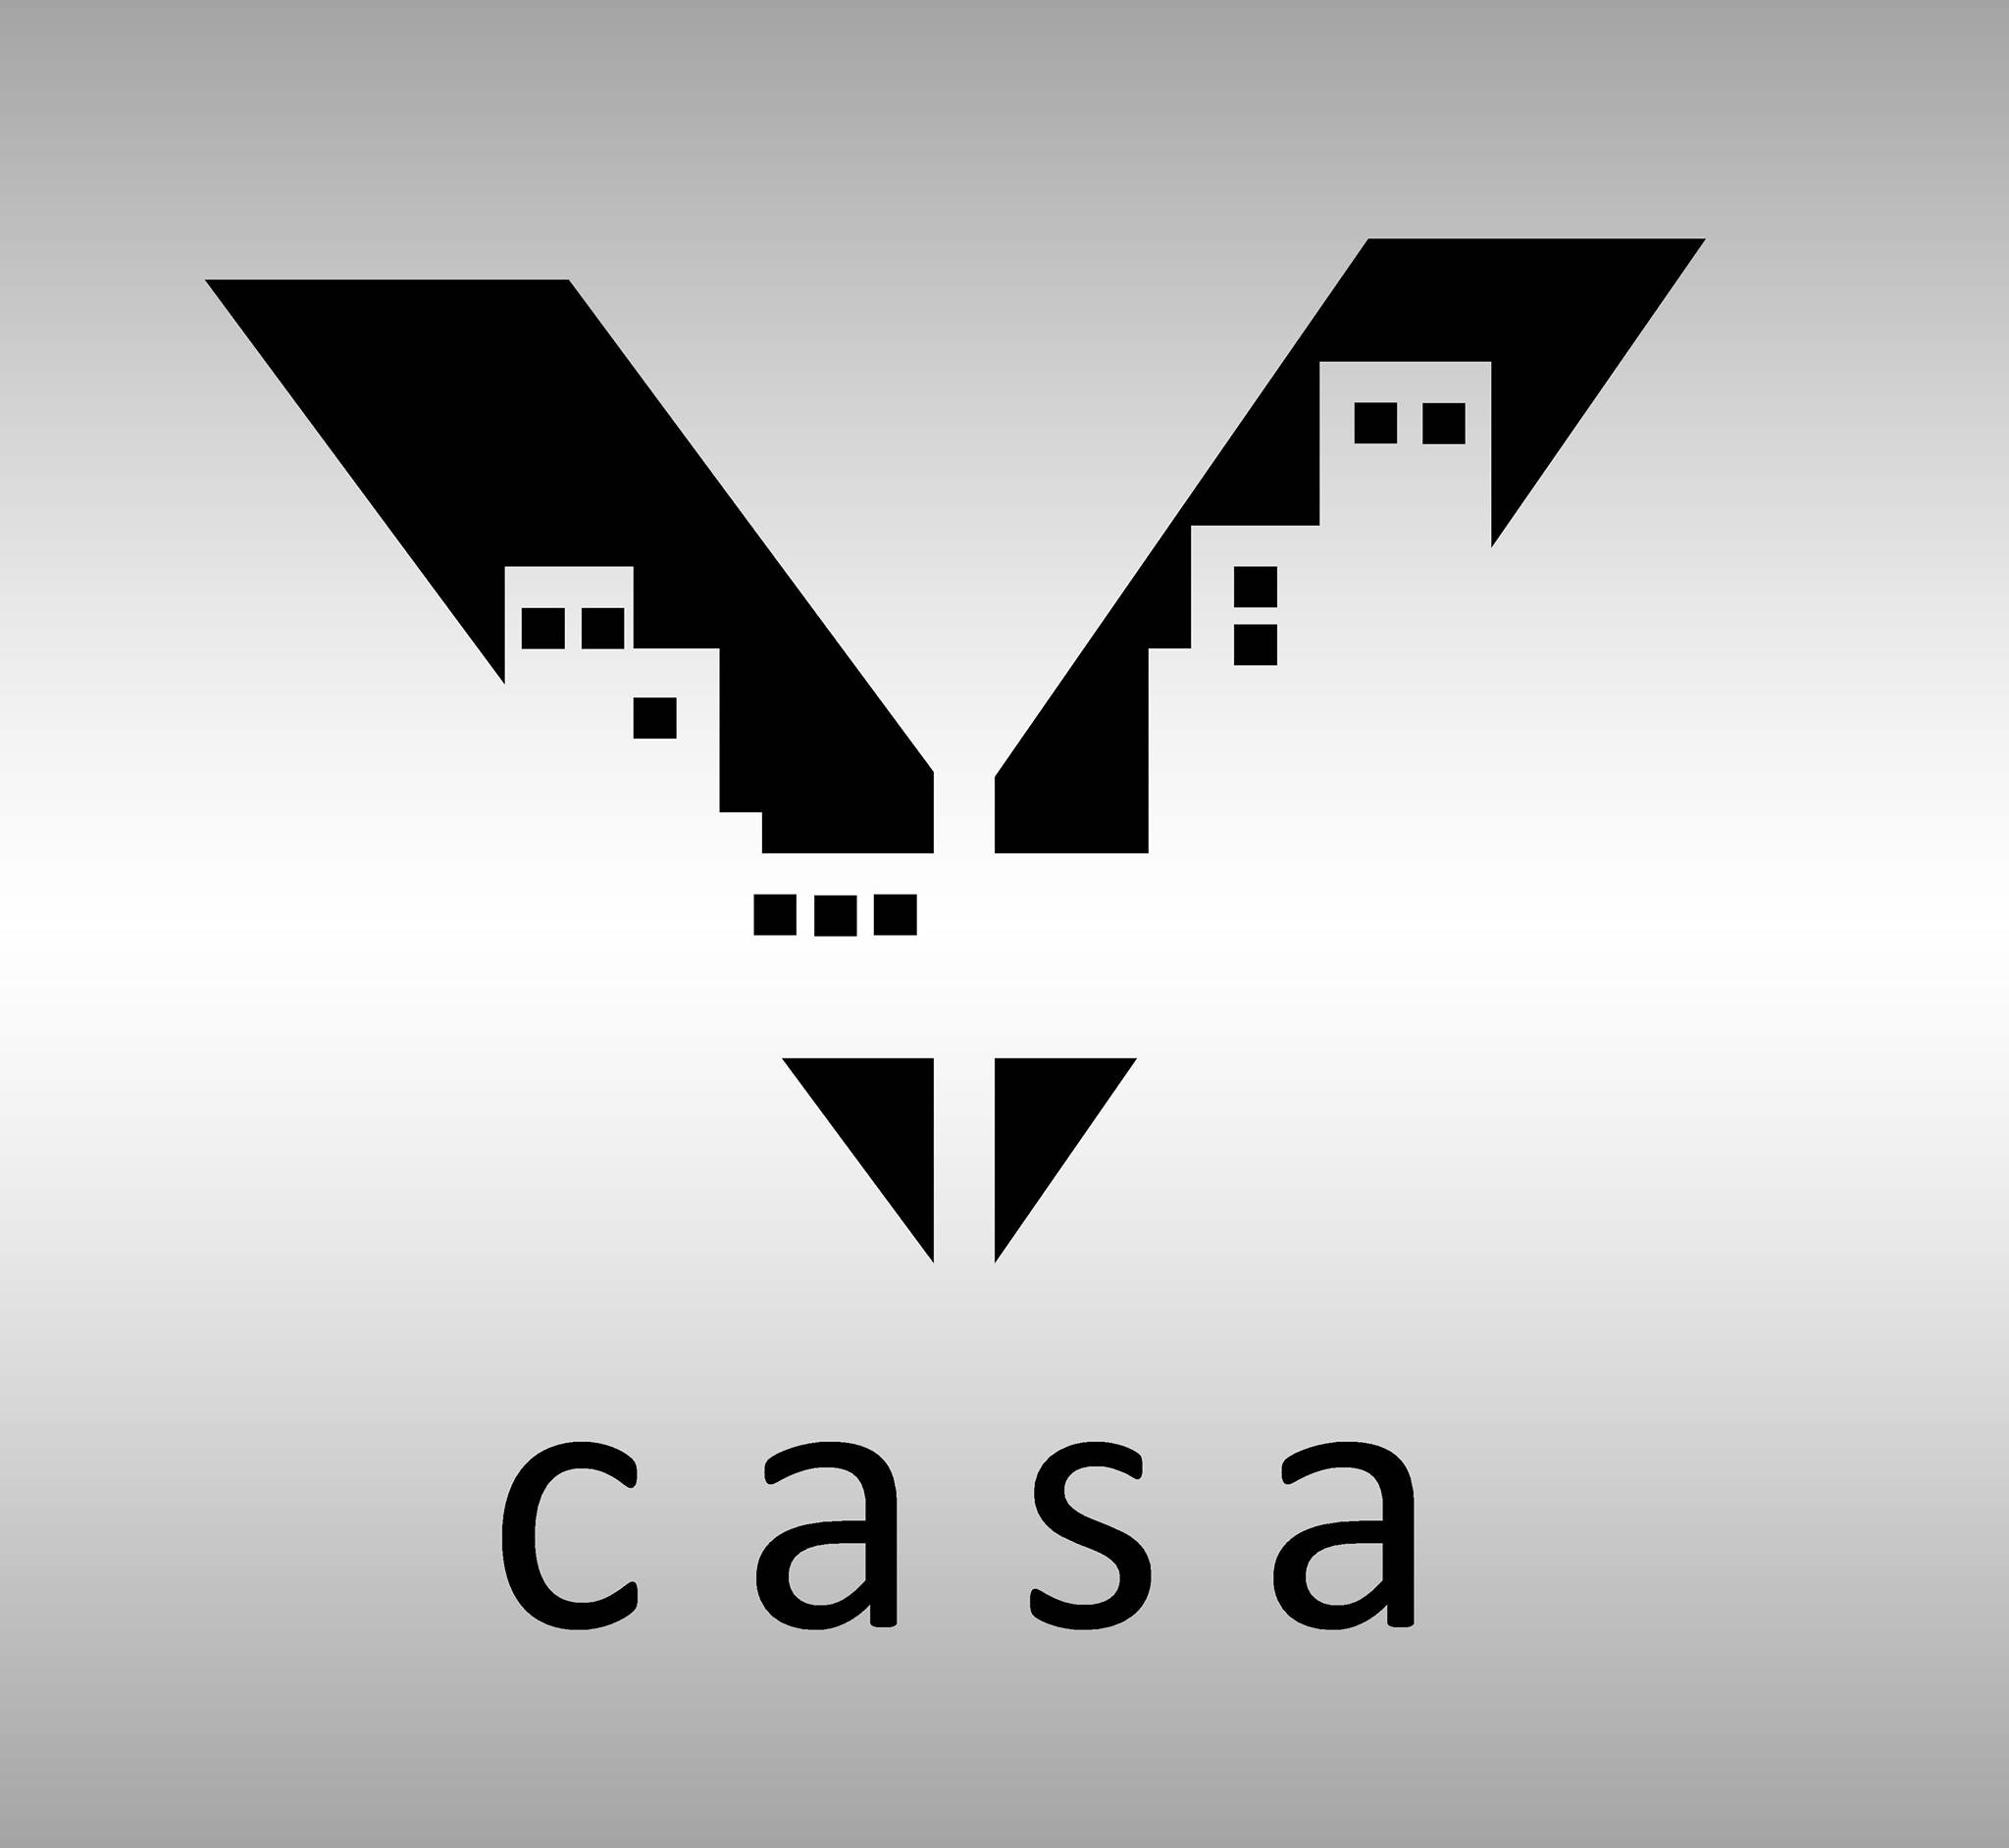 Vastucasa Architects & Interior Designer|Accounting Services|Professional Services